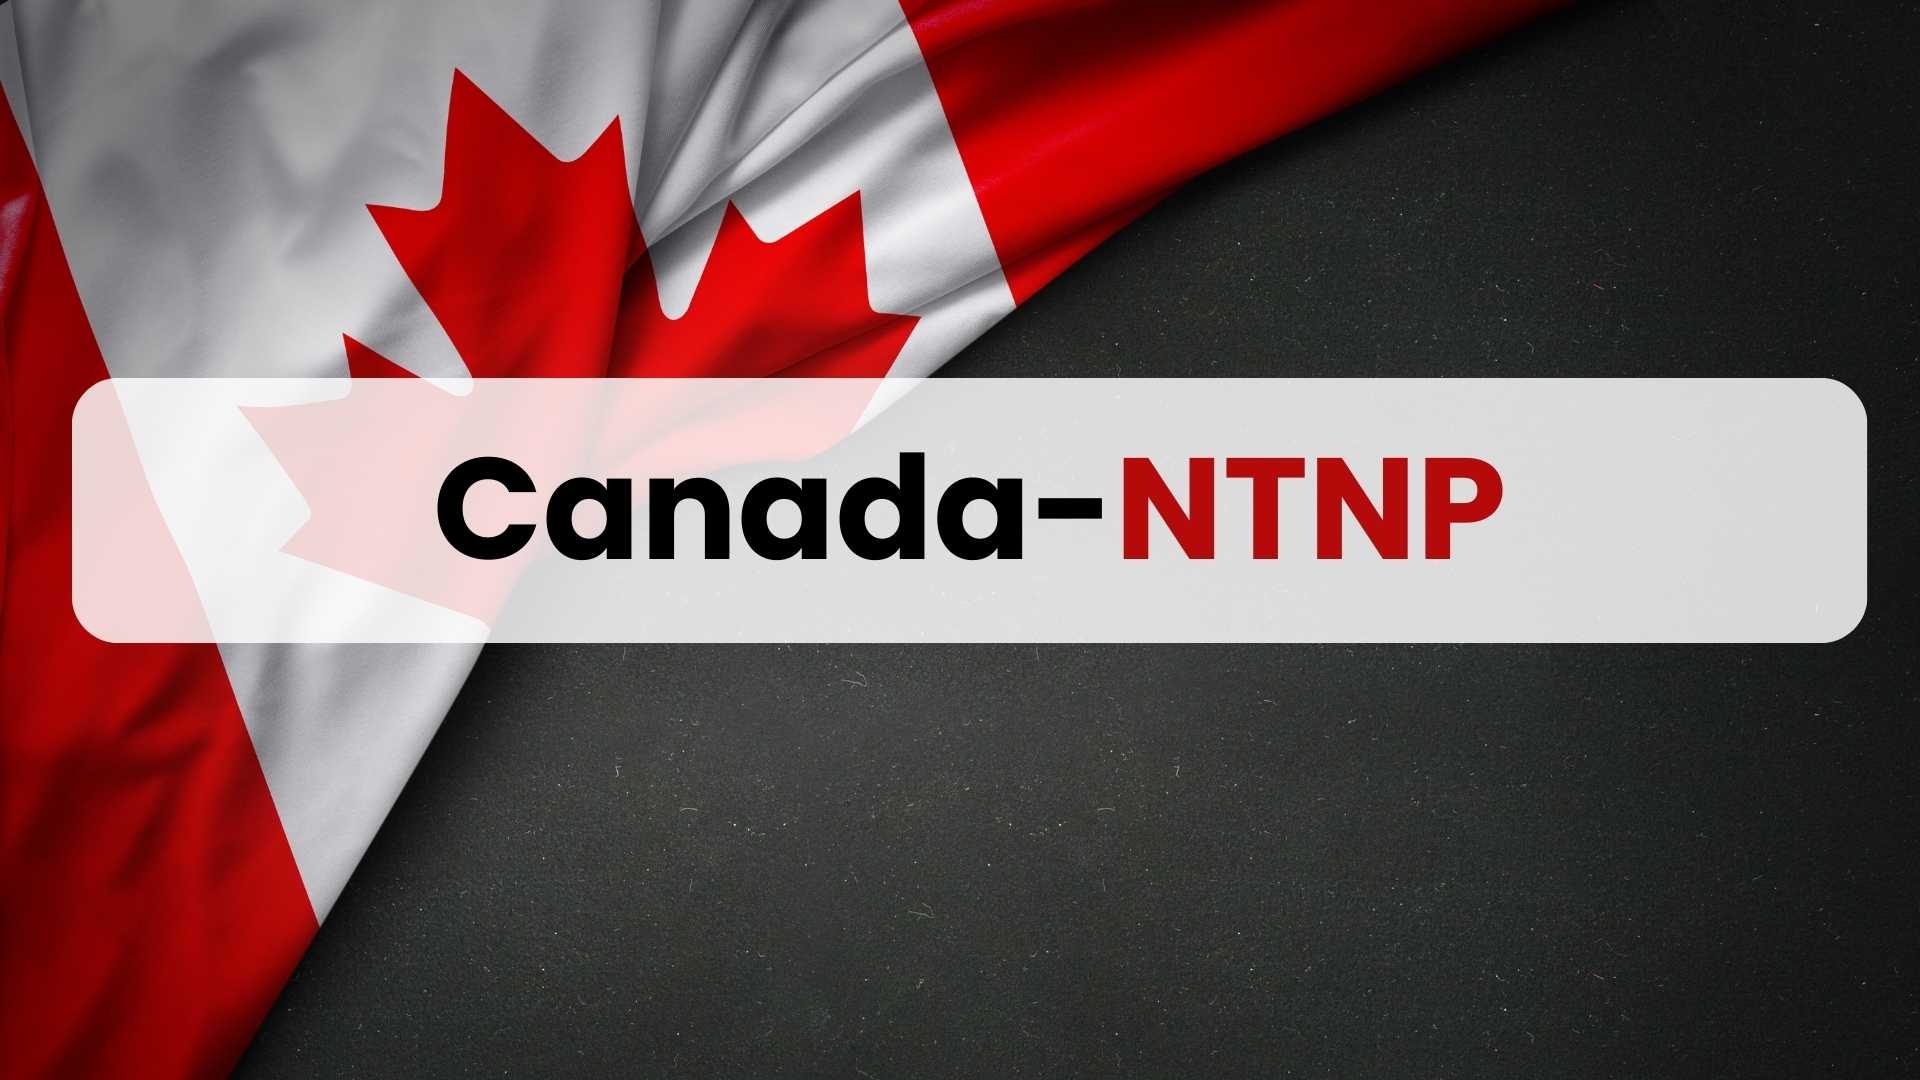 Canada-NTNP (Northwest Territories Nominee Program)